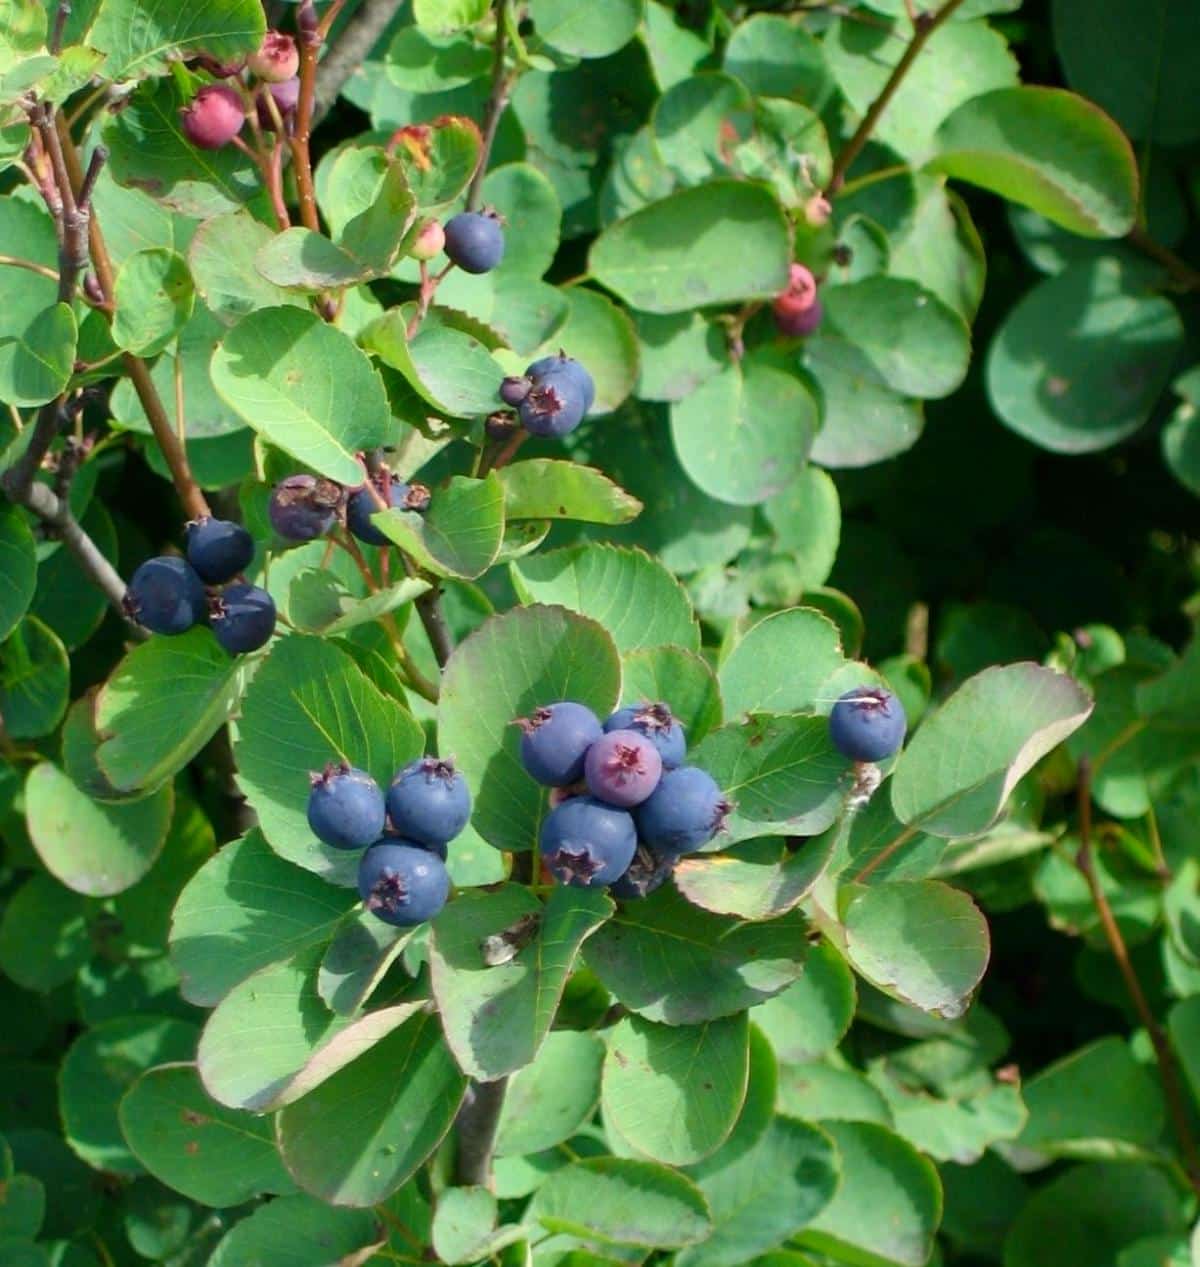 Blue edible serviceberries